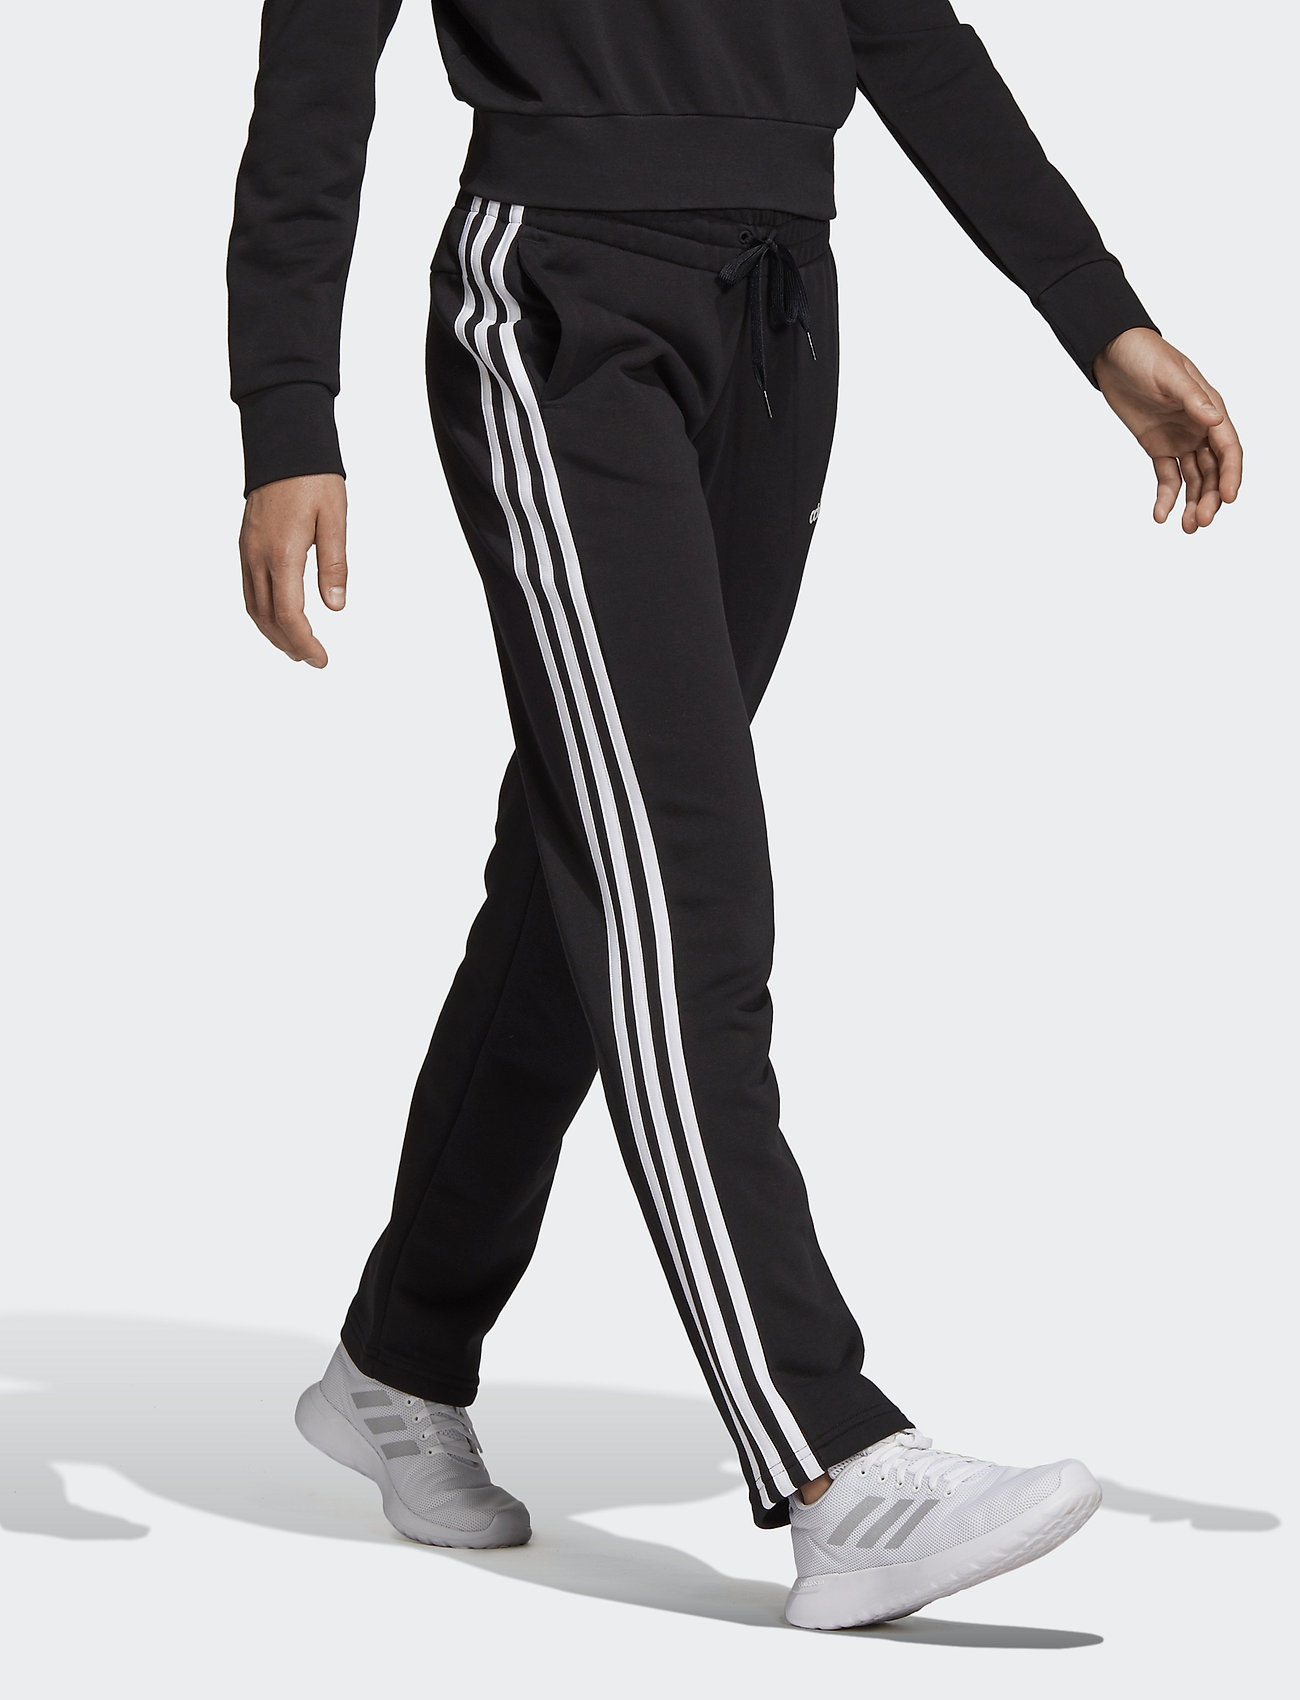 W E 3s Pant Oh (Black/white) (33.75 €) - adidas Performance - | Boozt.com